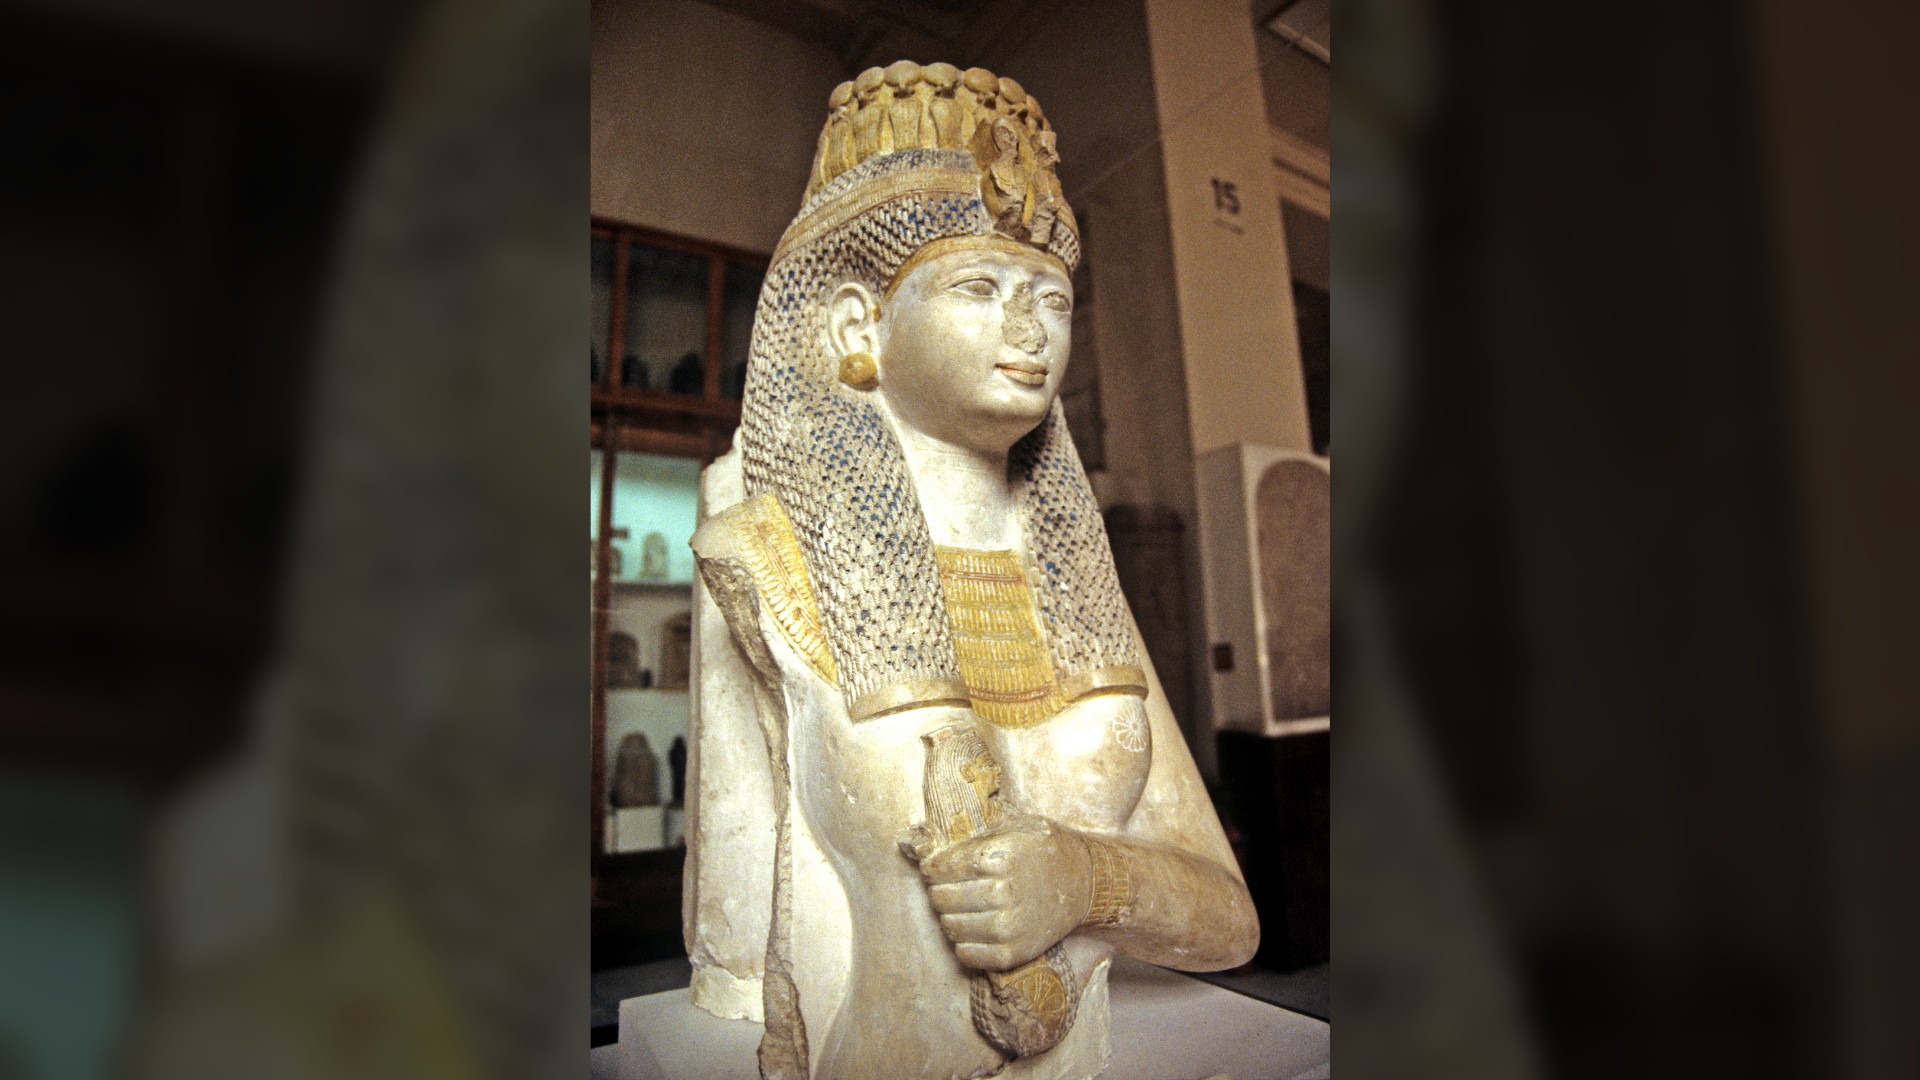 Statue of Queen Nefertiti in the Museum of Antiquities, Cairo, Egypt.